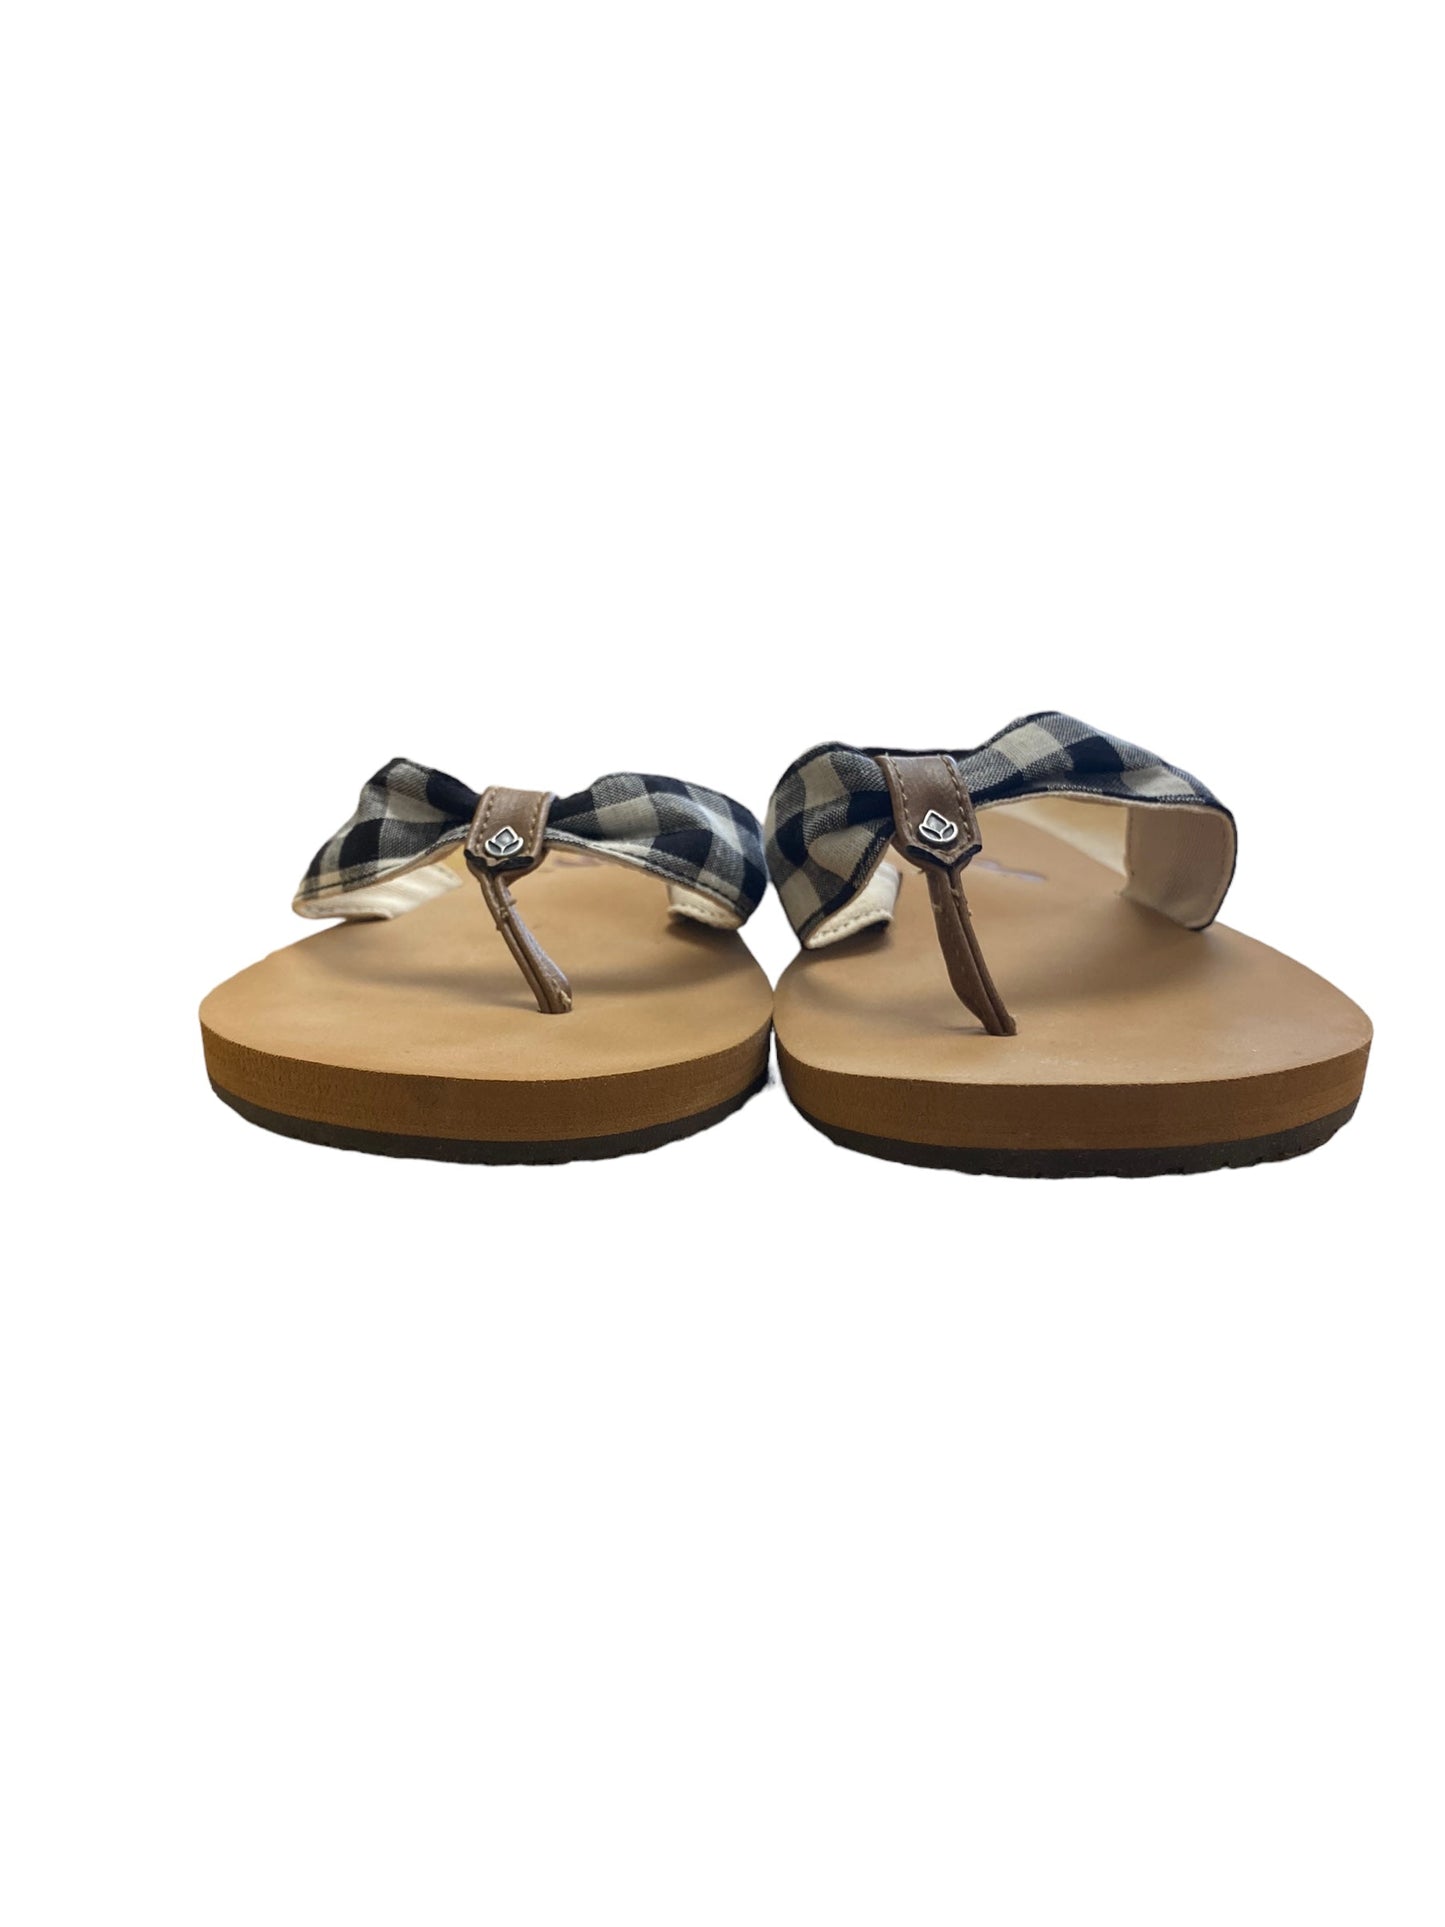 Sandals Flip Flops By Reef  Size: 8